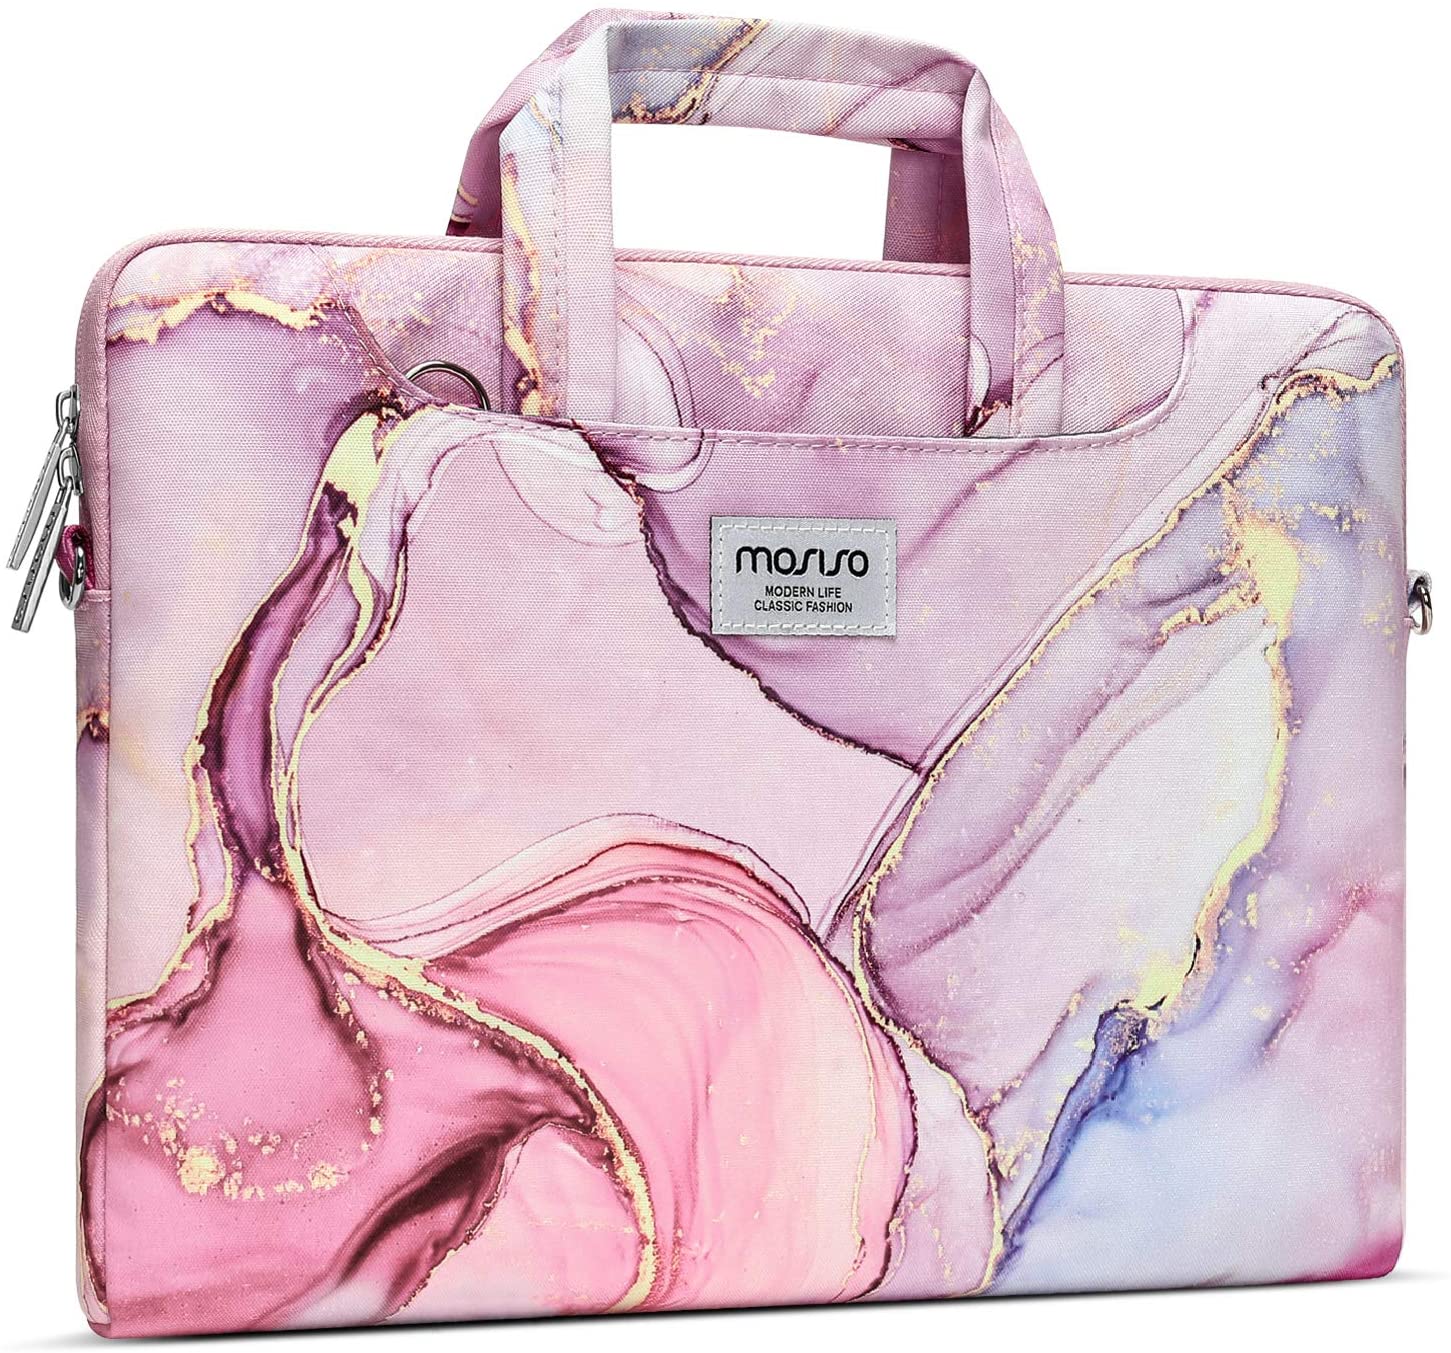 Fashion Women's Laptop Bag For 13.3 15 16 Inch Notebook Shoulder